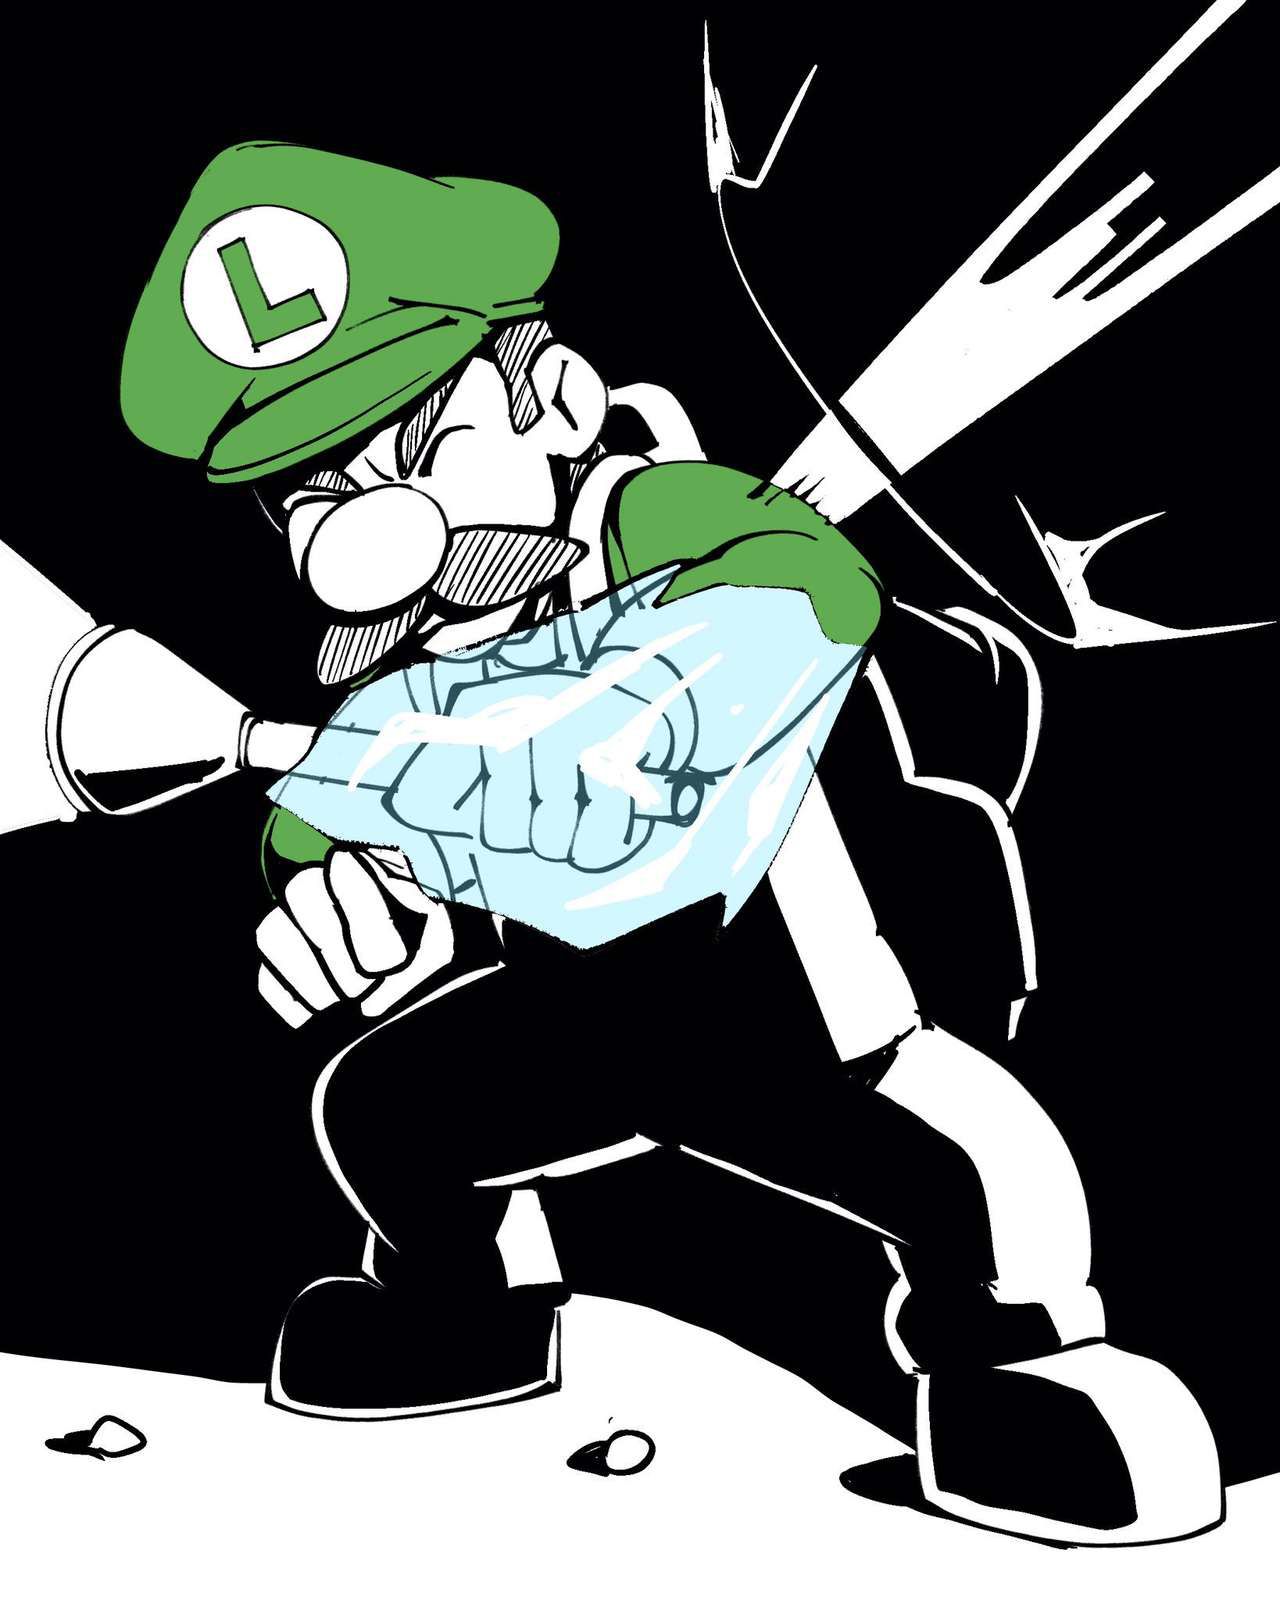 [Nisego] Inktober 2 - Luigi's Mansion (Super Mario Bros.) [Ongoing] 14